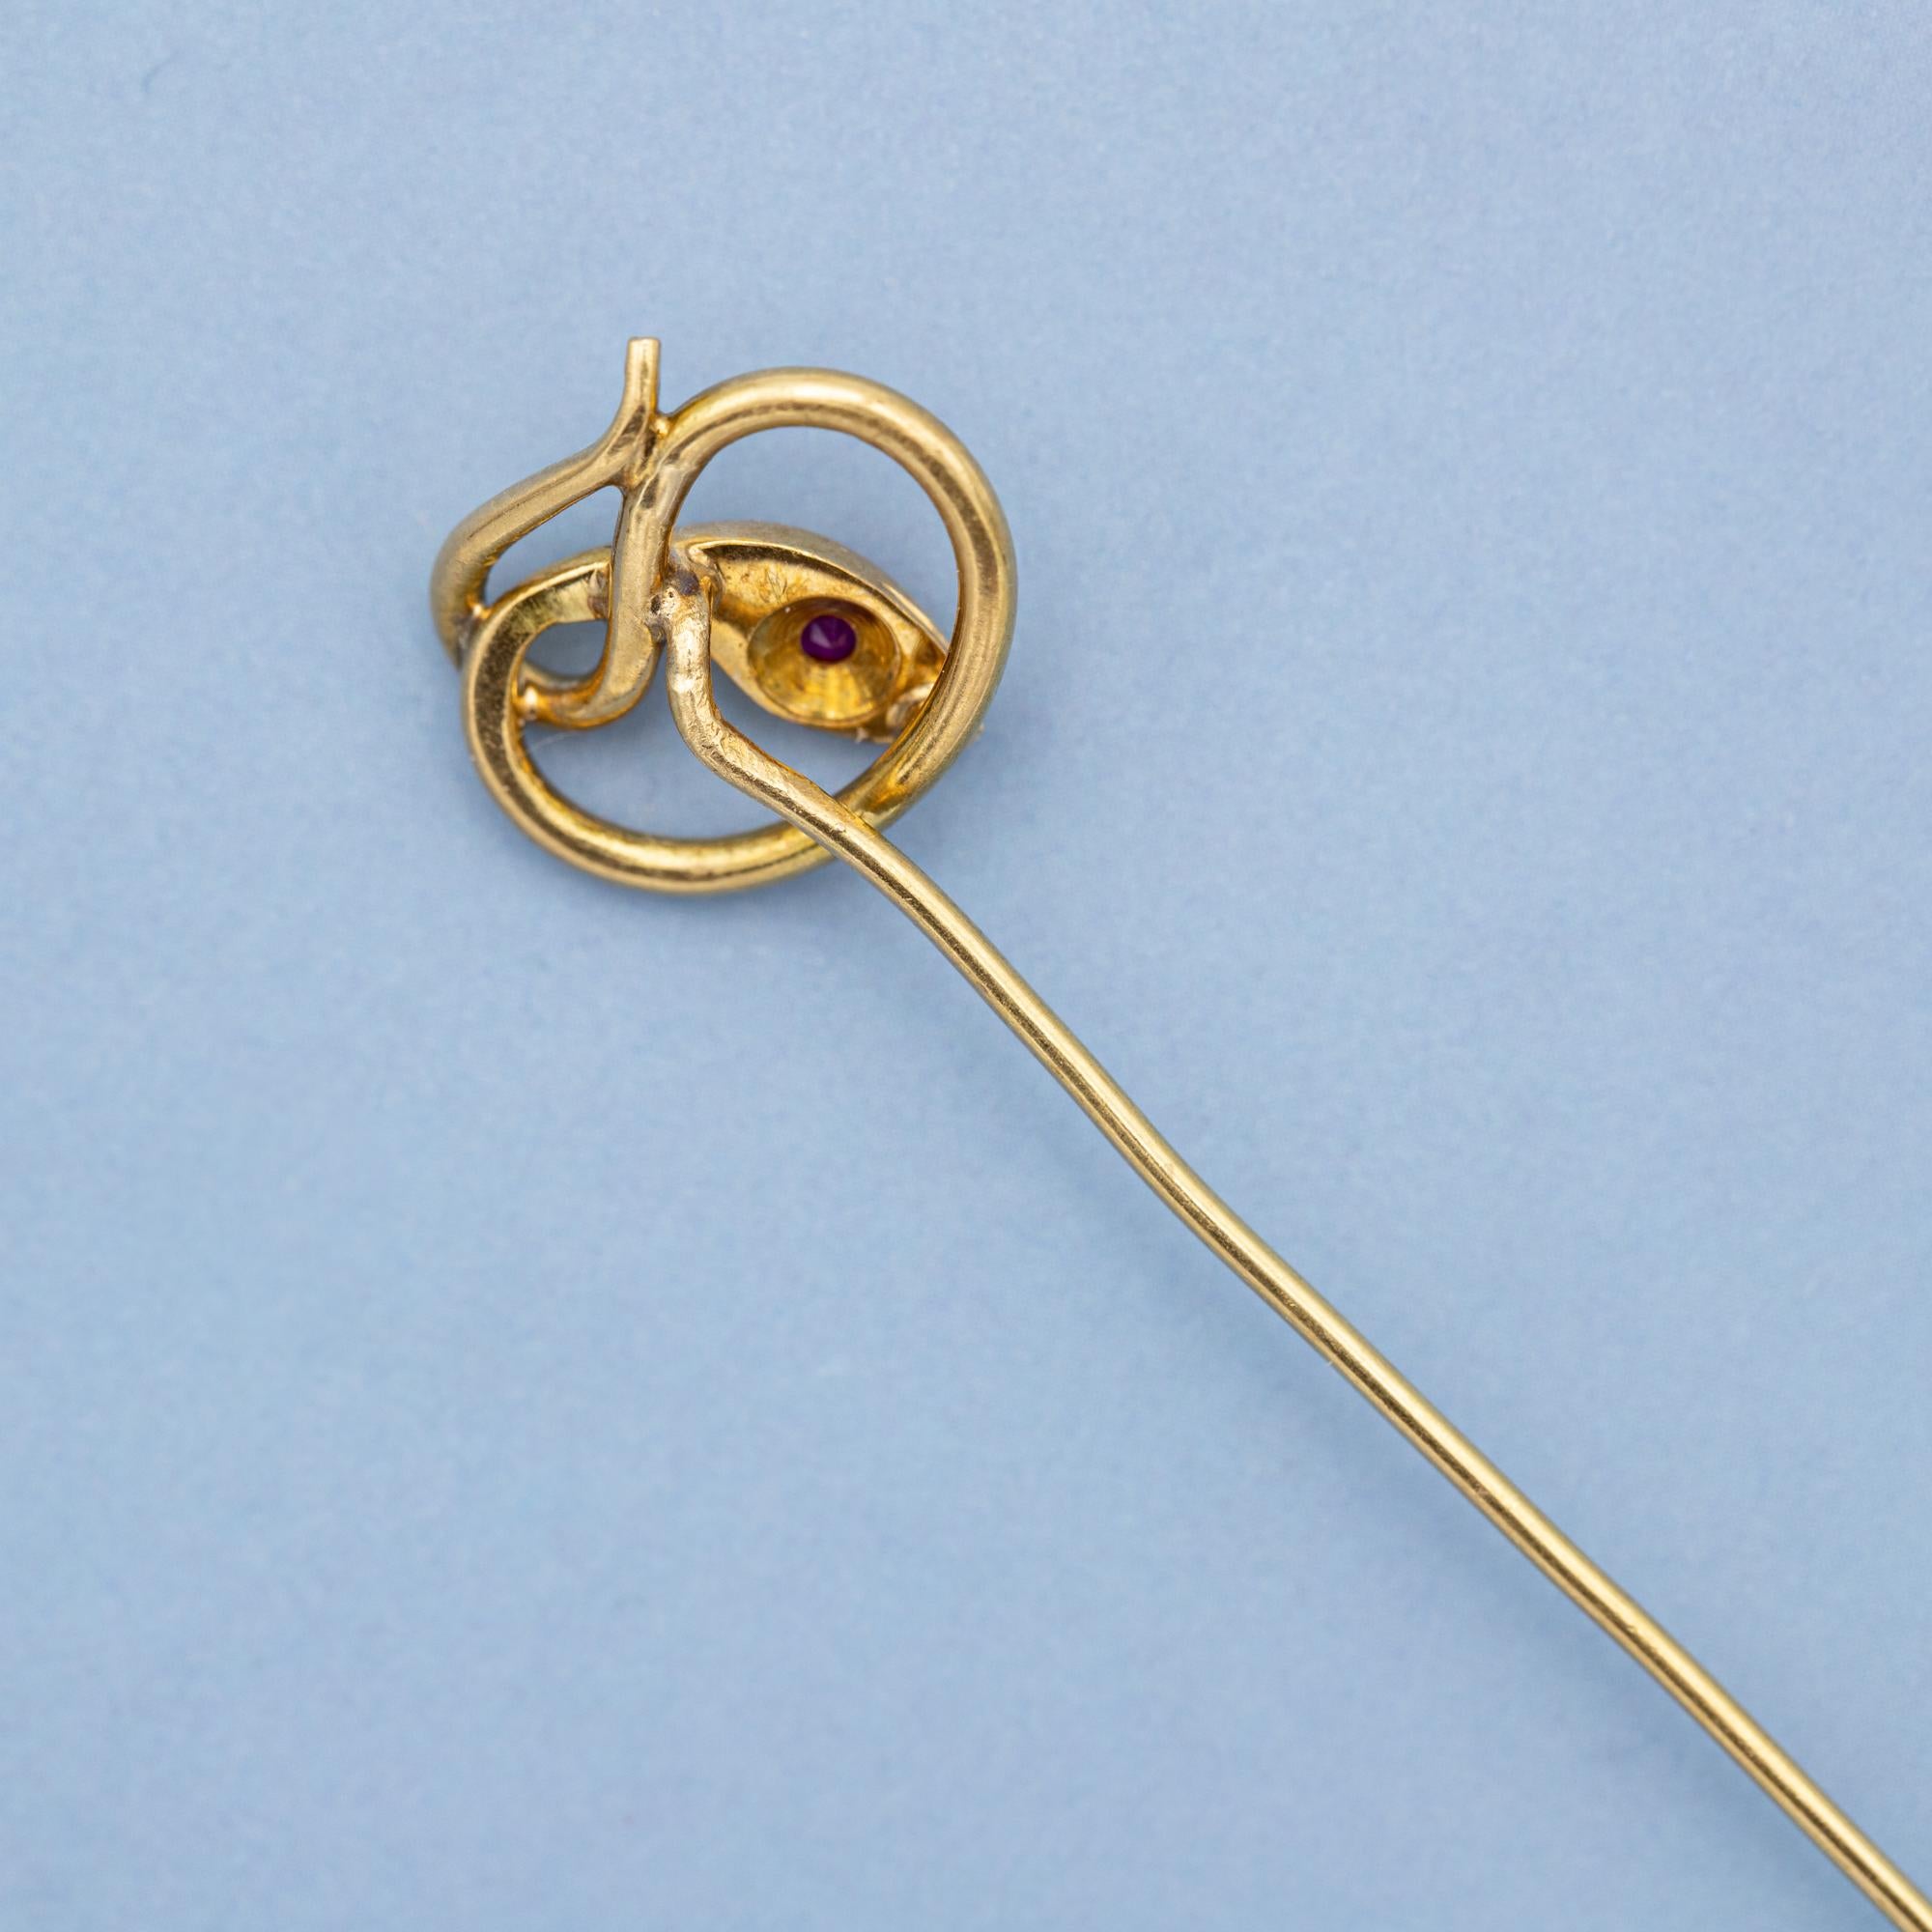 18k Yellow gold stick pin - Snake brooch - Antique French serpentine cravat pin 2